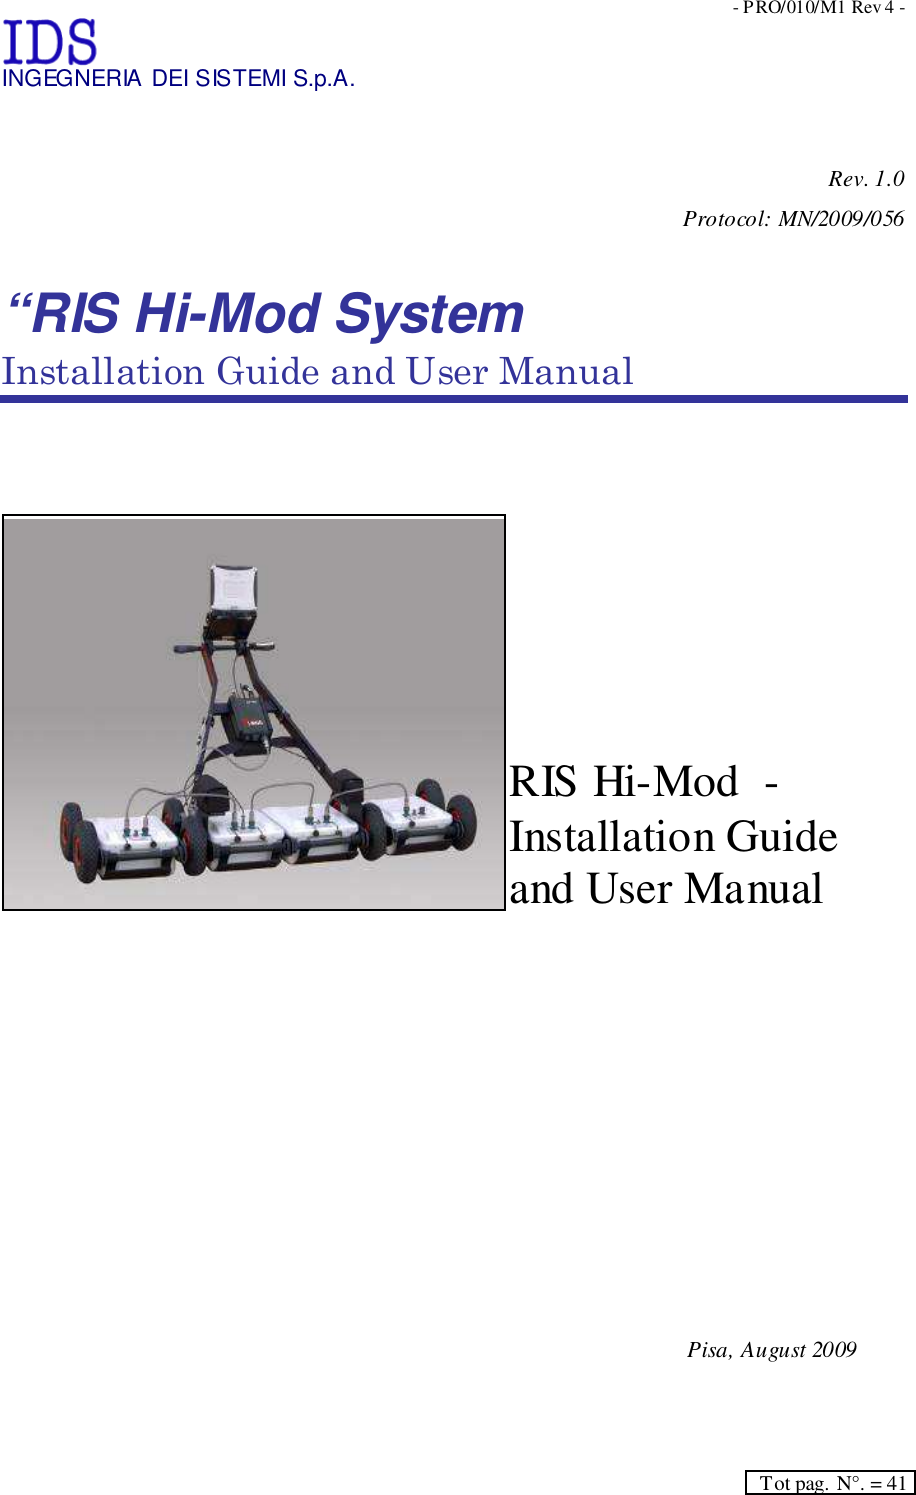 Tot pag. N°. = 41  - PRO/010/M1 Rev 4 -  INGEGNERIA DEI SISTEMI S.p.A.   Rev. 1.0 Protocol: MN/2009/056  “RIS Hi-Mod System Installation Guide and User Manual                                                Pisa, August 2009  RIS Hi-Mod  - Installation Guide and User Manual 